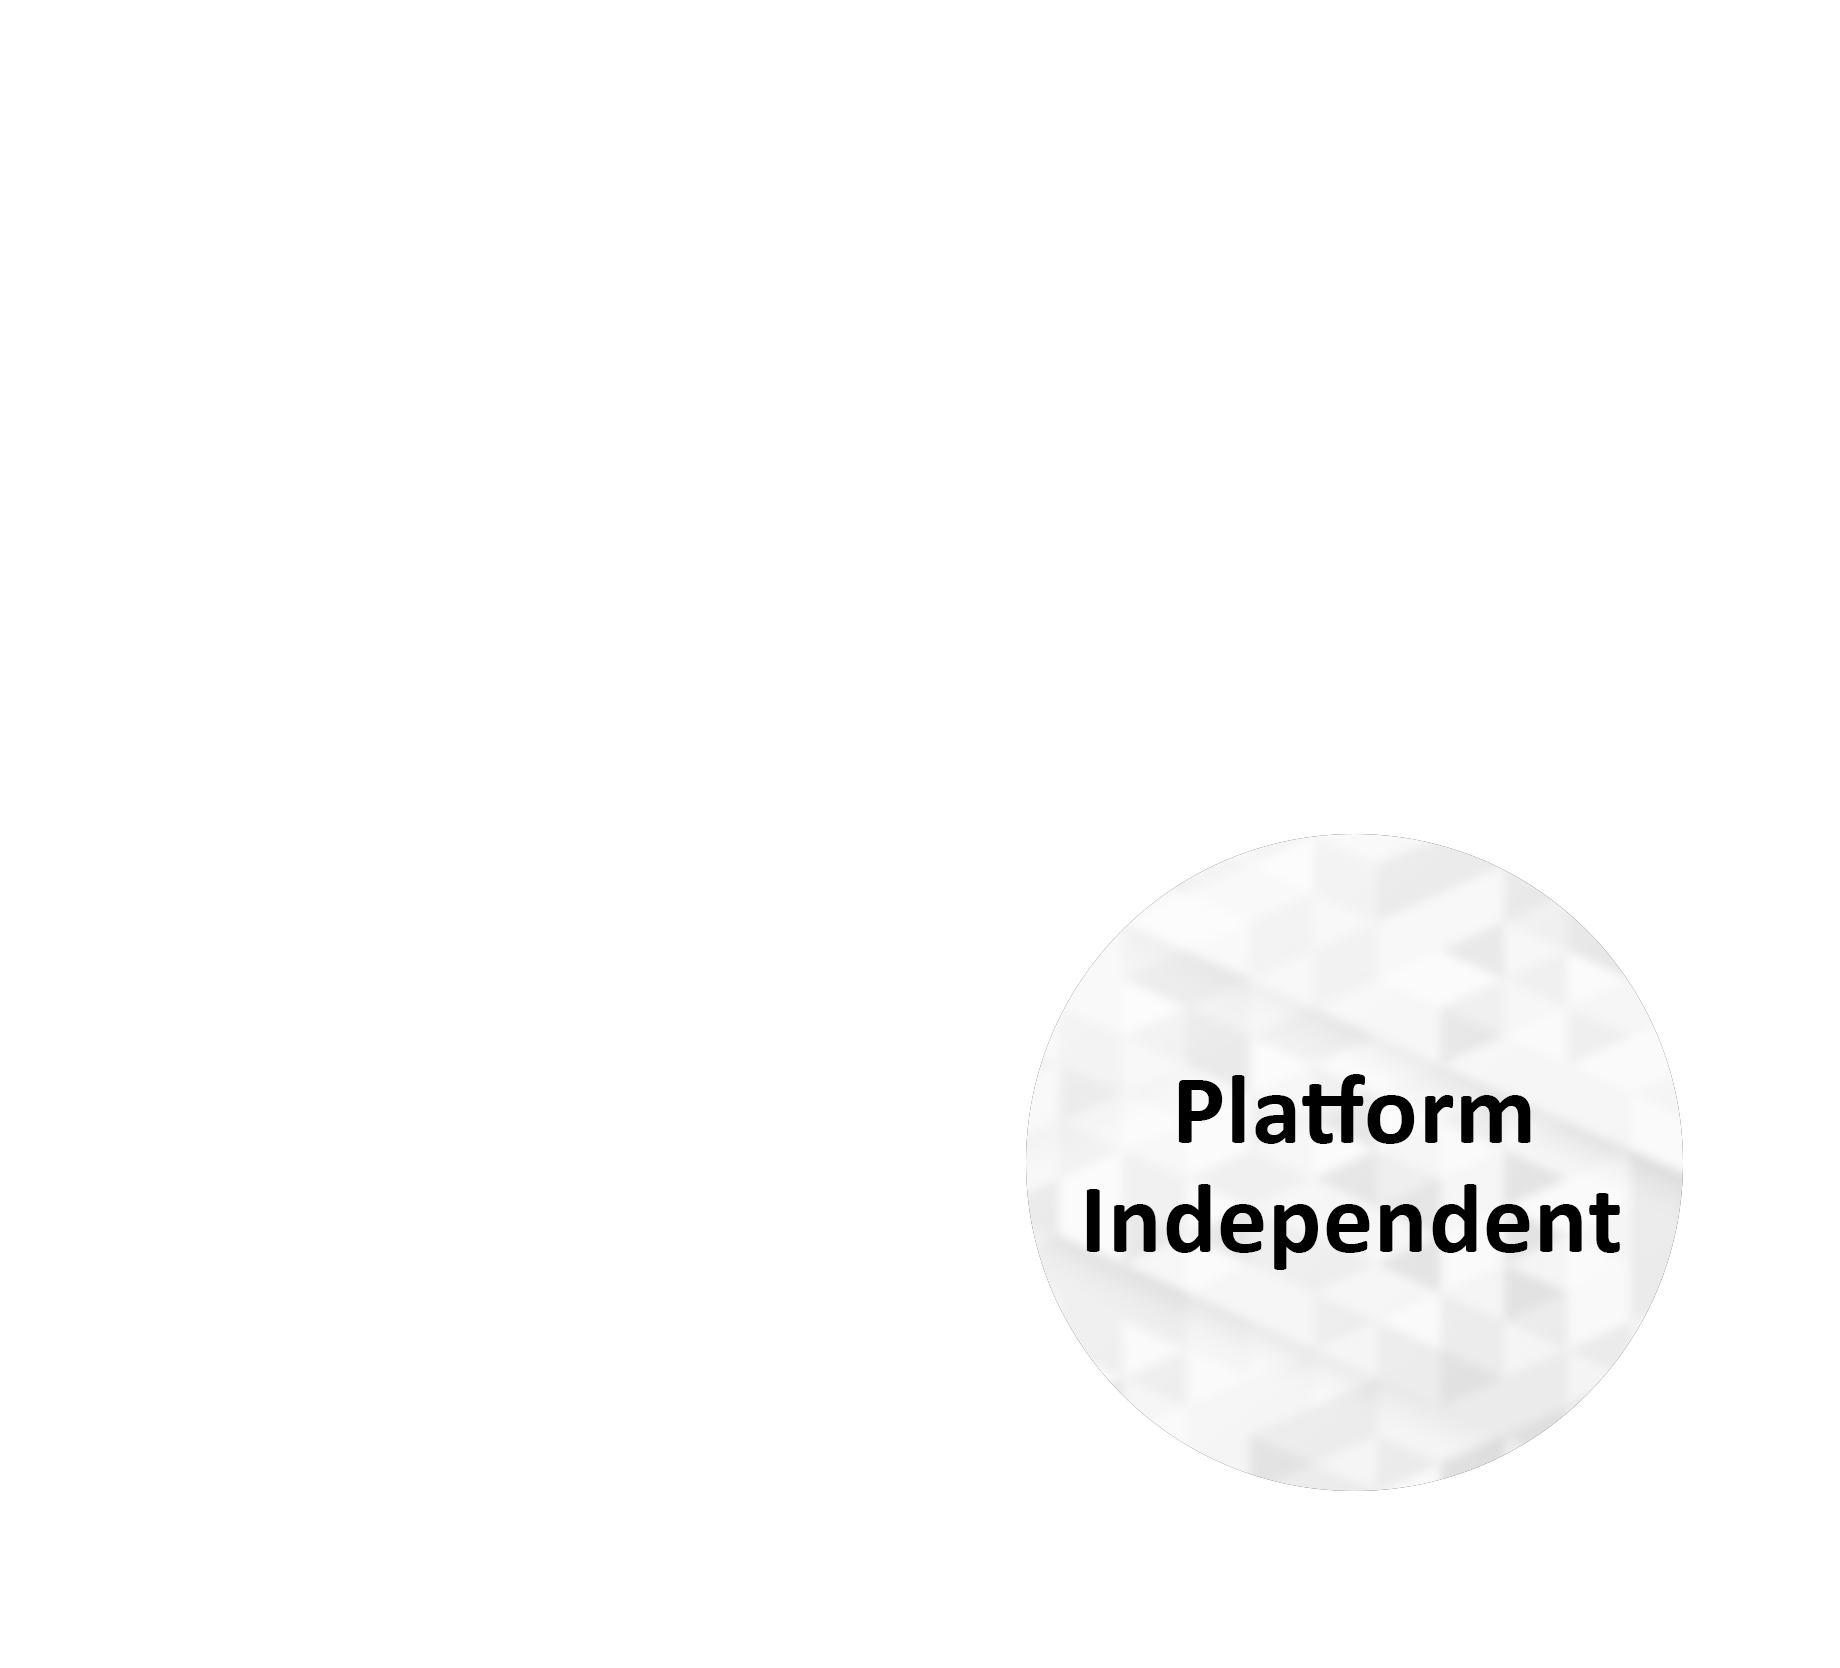 Platform Independent